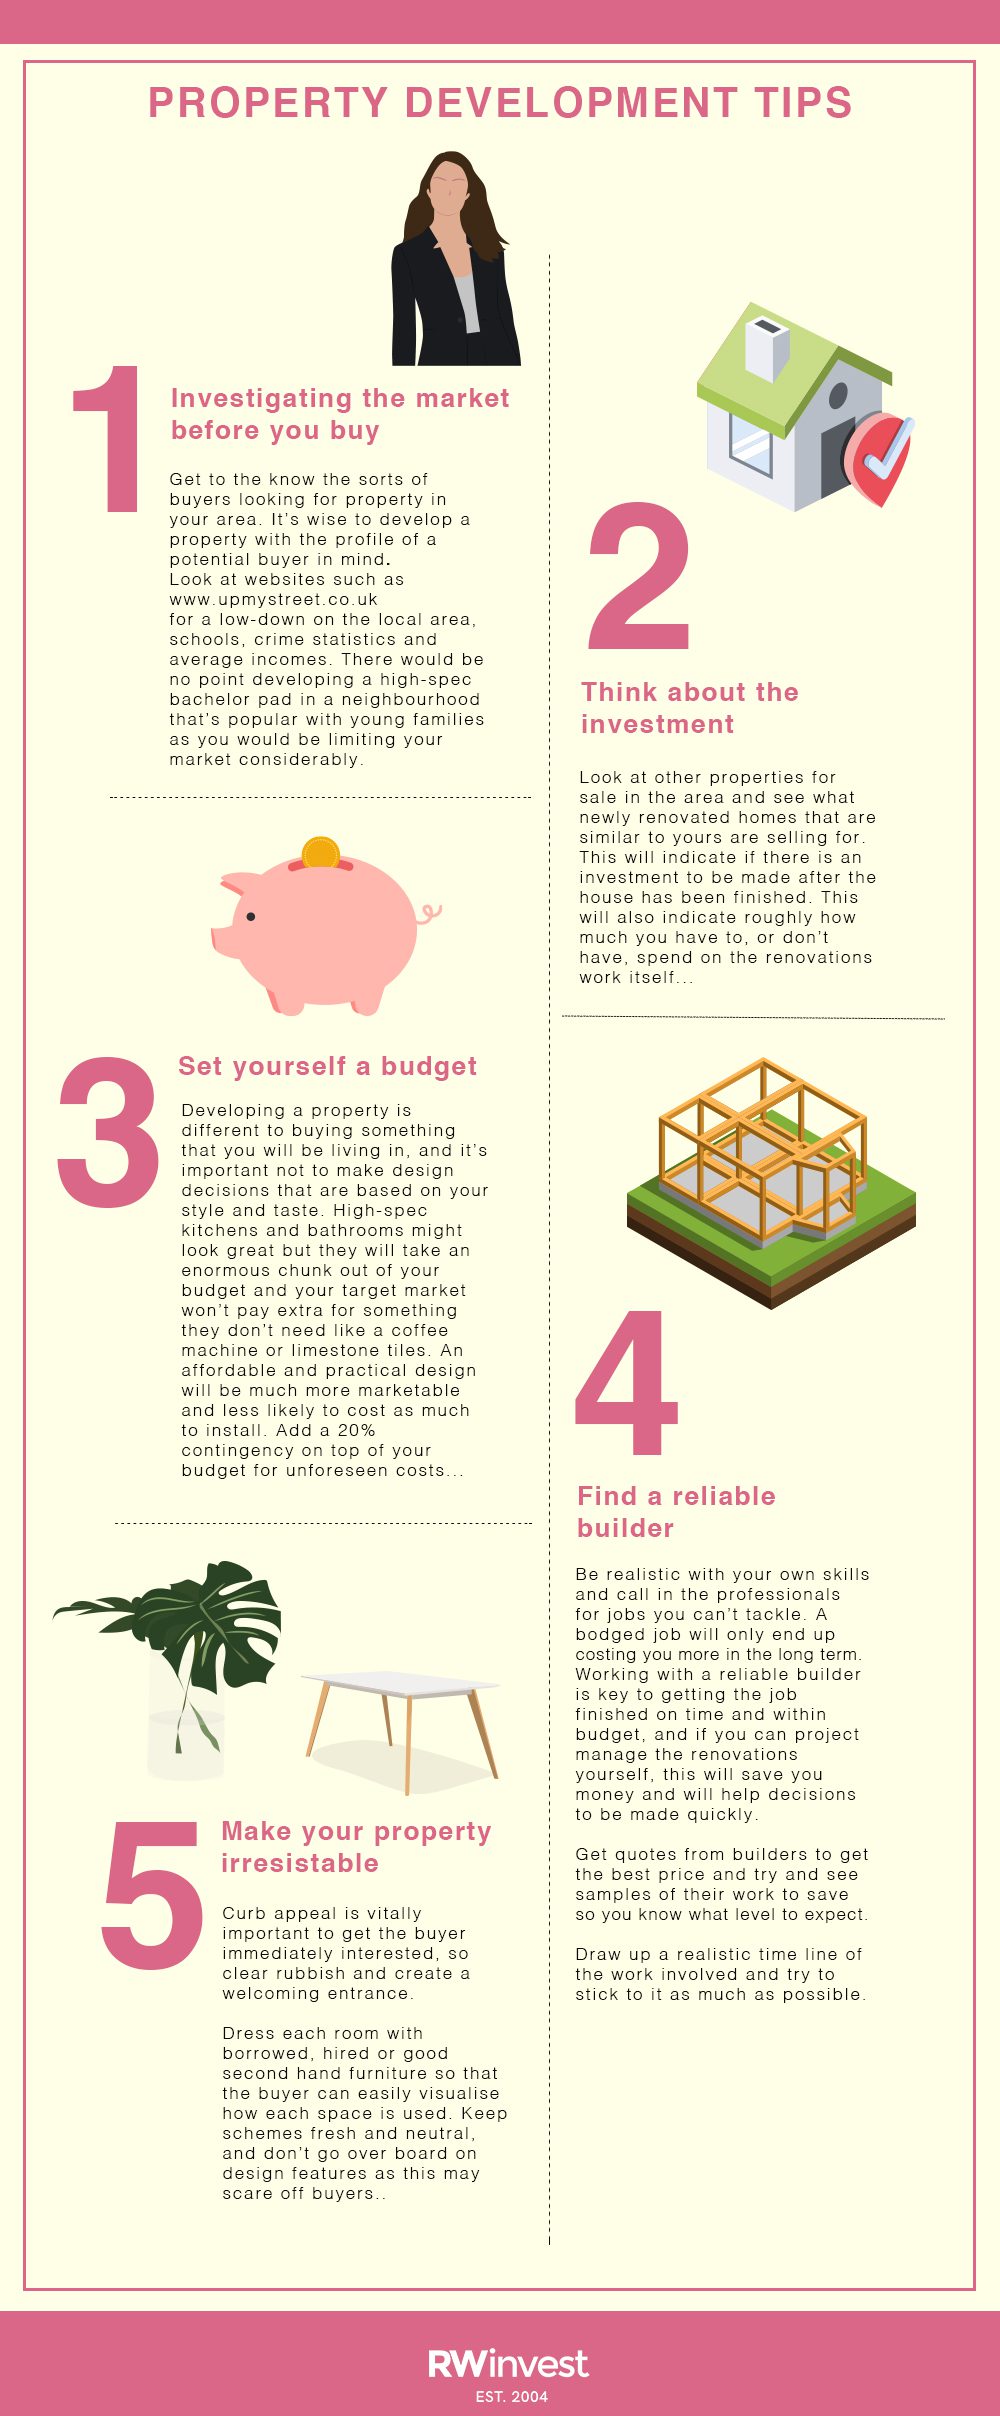 5 Property Development Tips infographic